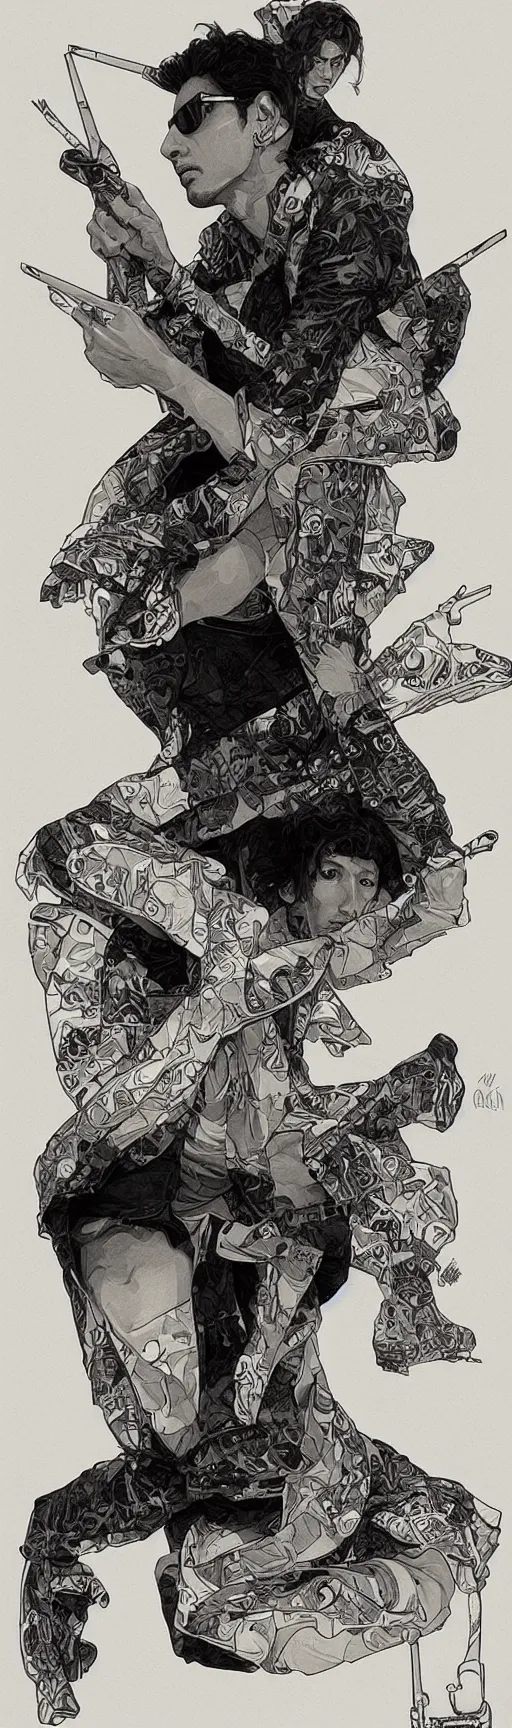 Image similar to amazing lifelike award winning pencil illustration of Jeff Goldblum shibuya punk skater trending on art station artgerm Greg rutkowski alphonse mucha cinematic